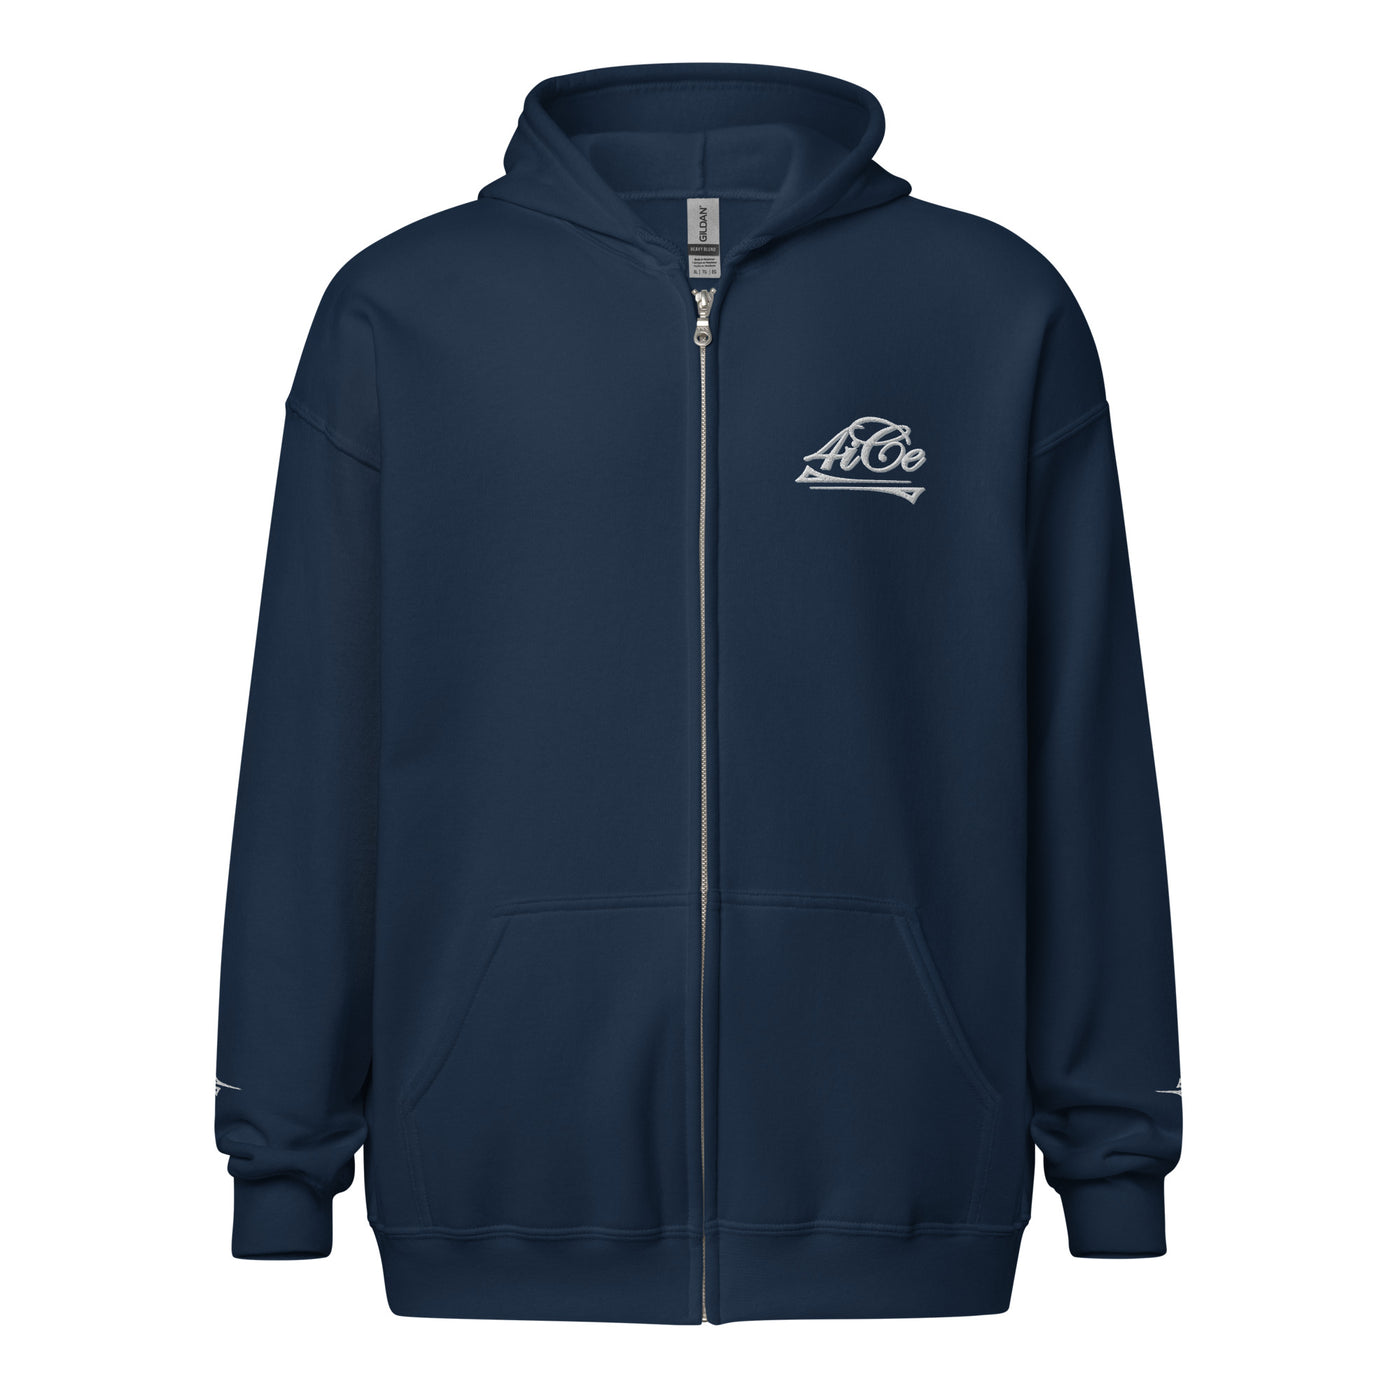  4iCe® Elite Boxing zip hoodie, navy